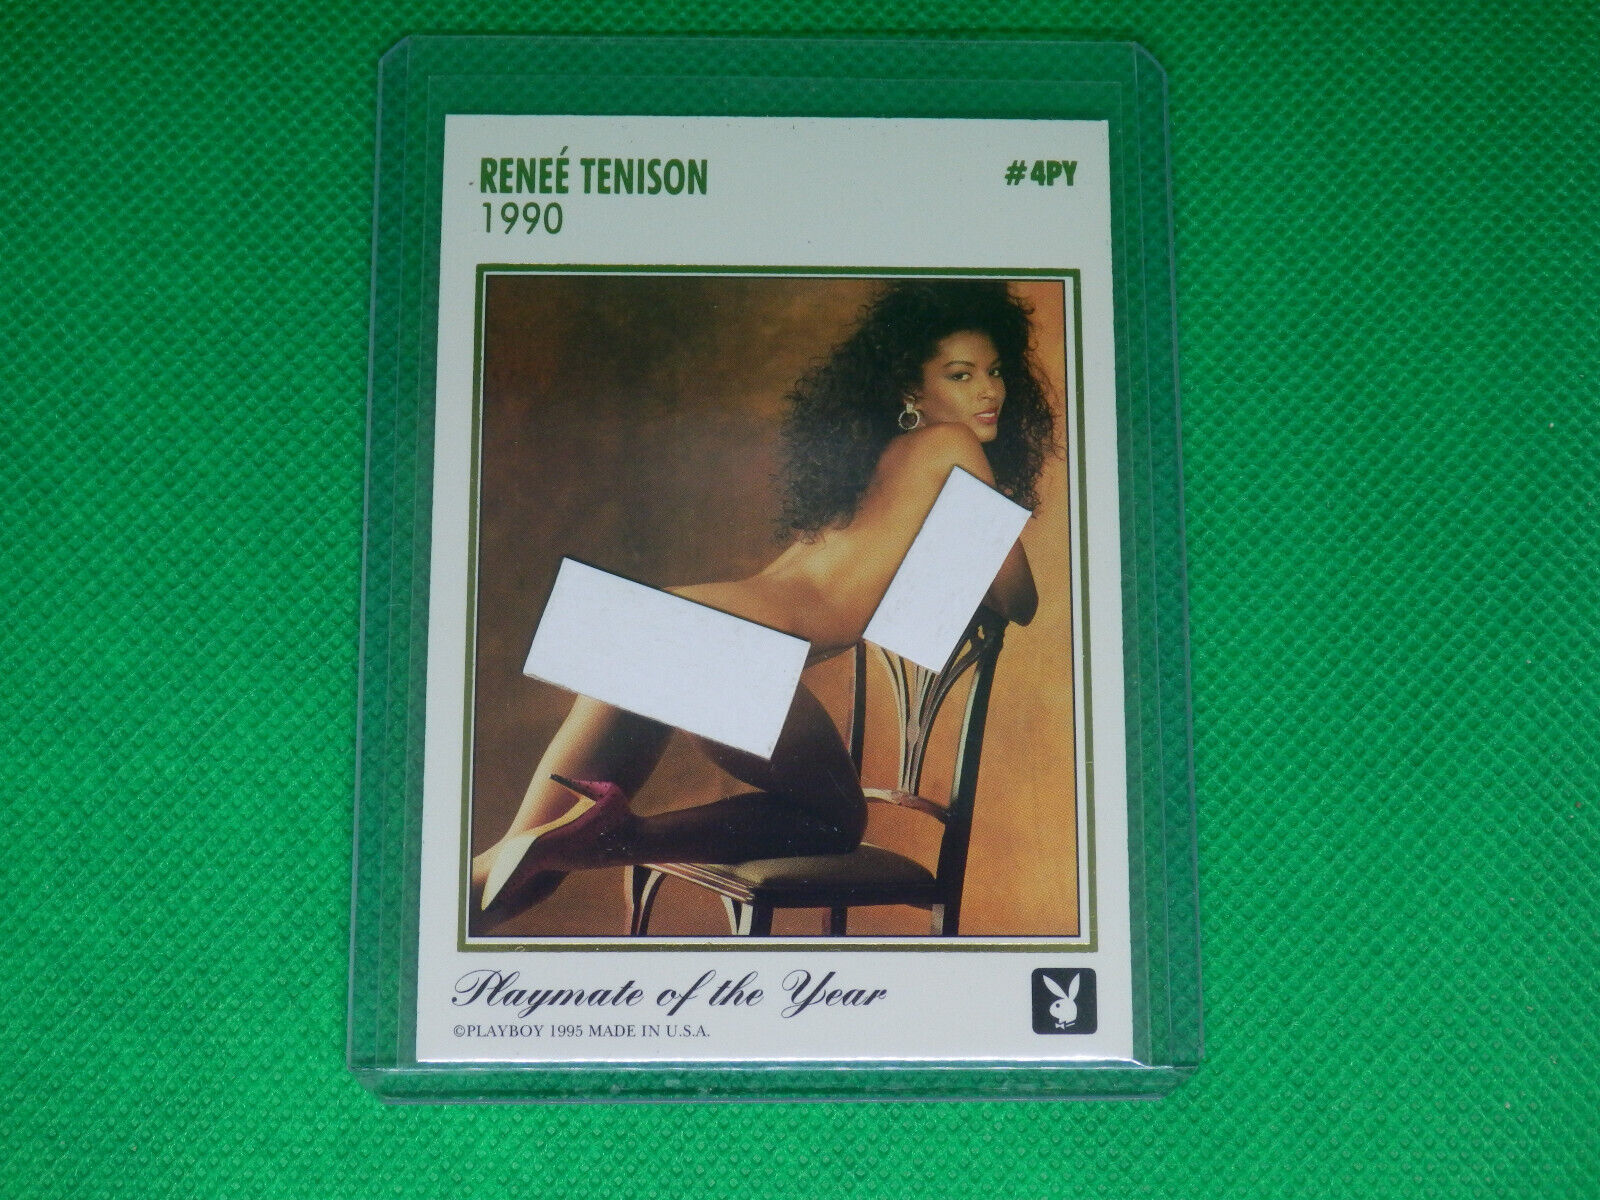 1995 PLAYBOY GOLD FOIL CARD-4PY RENEE\' TENISON